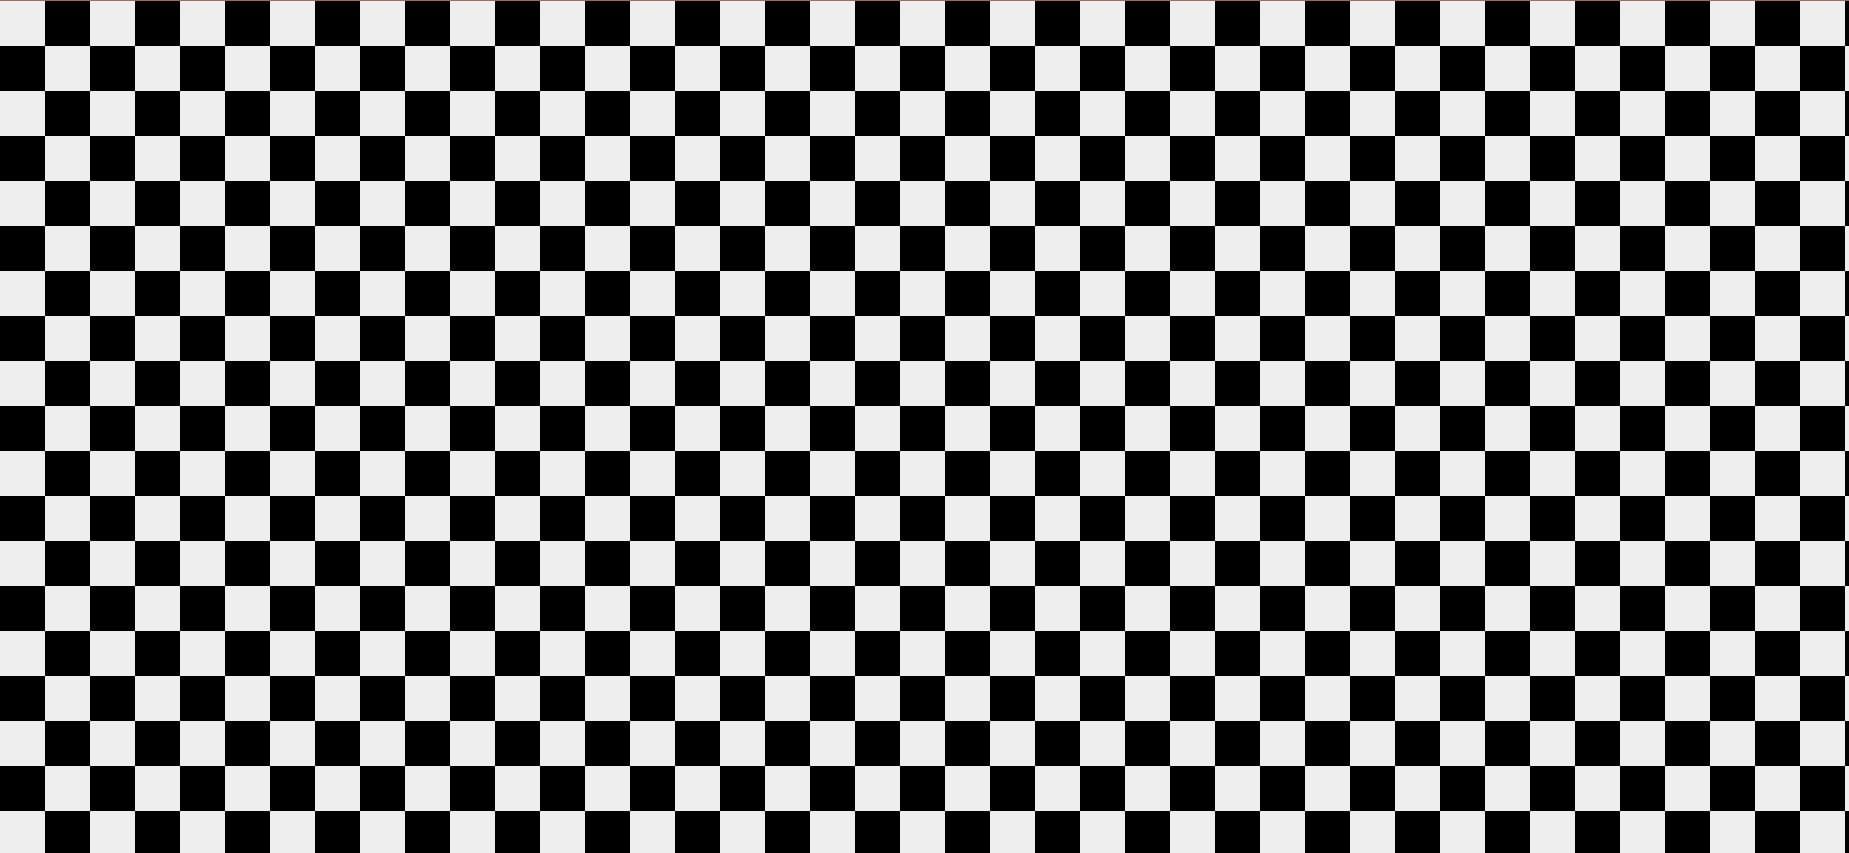 Chess Board background pattern